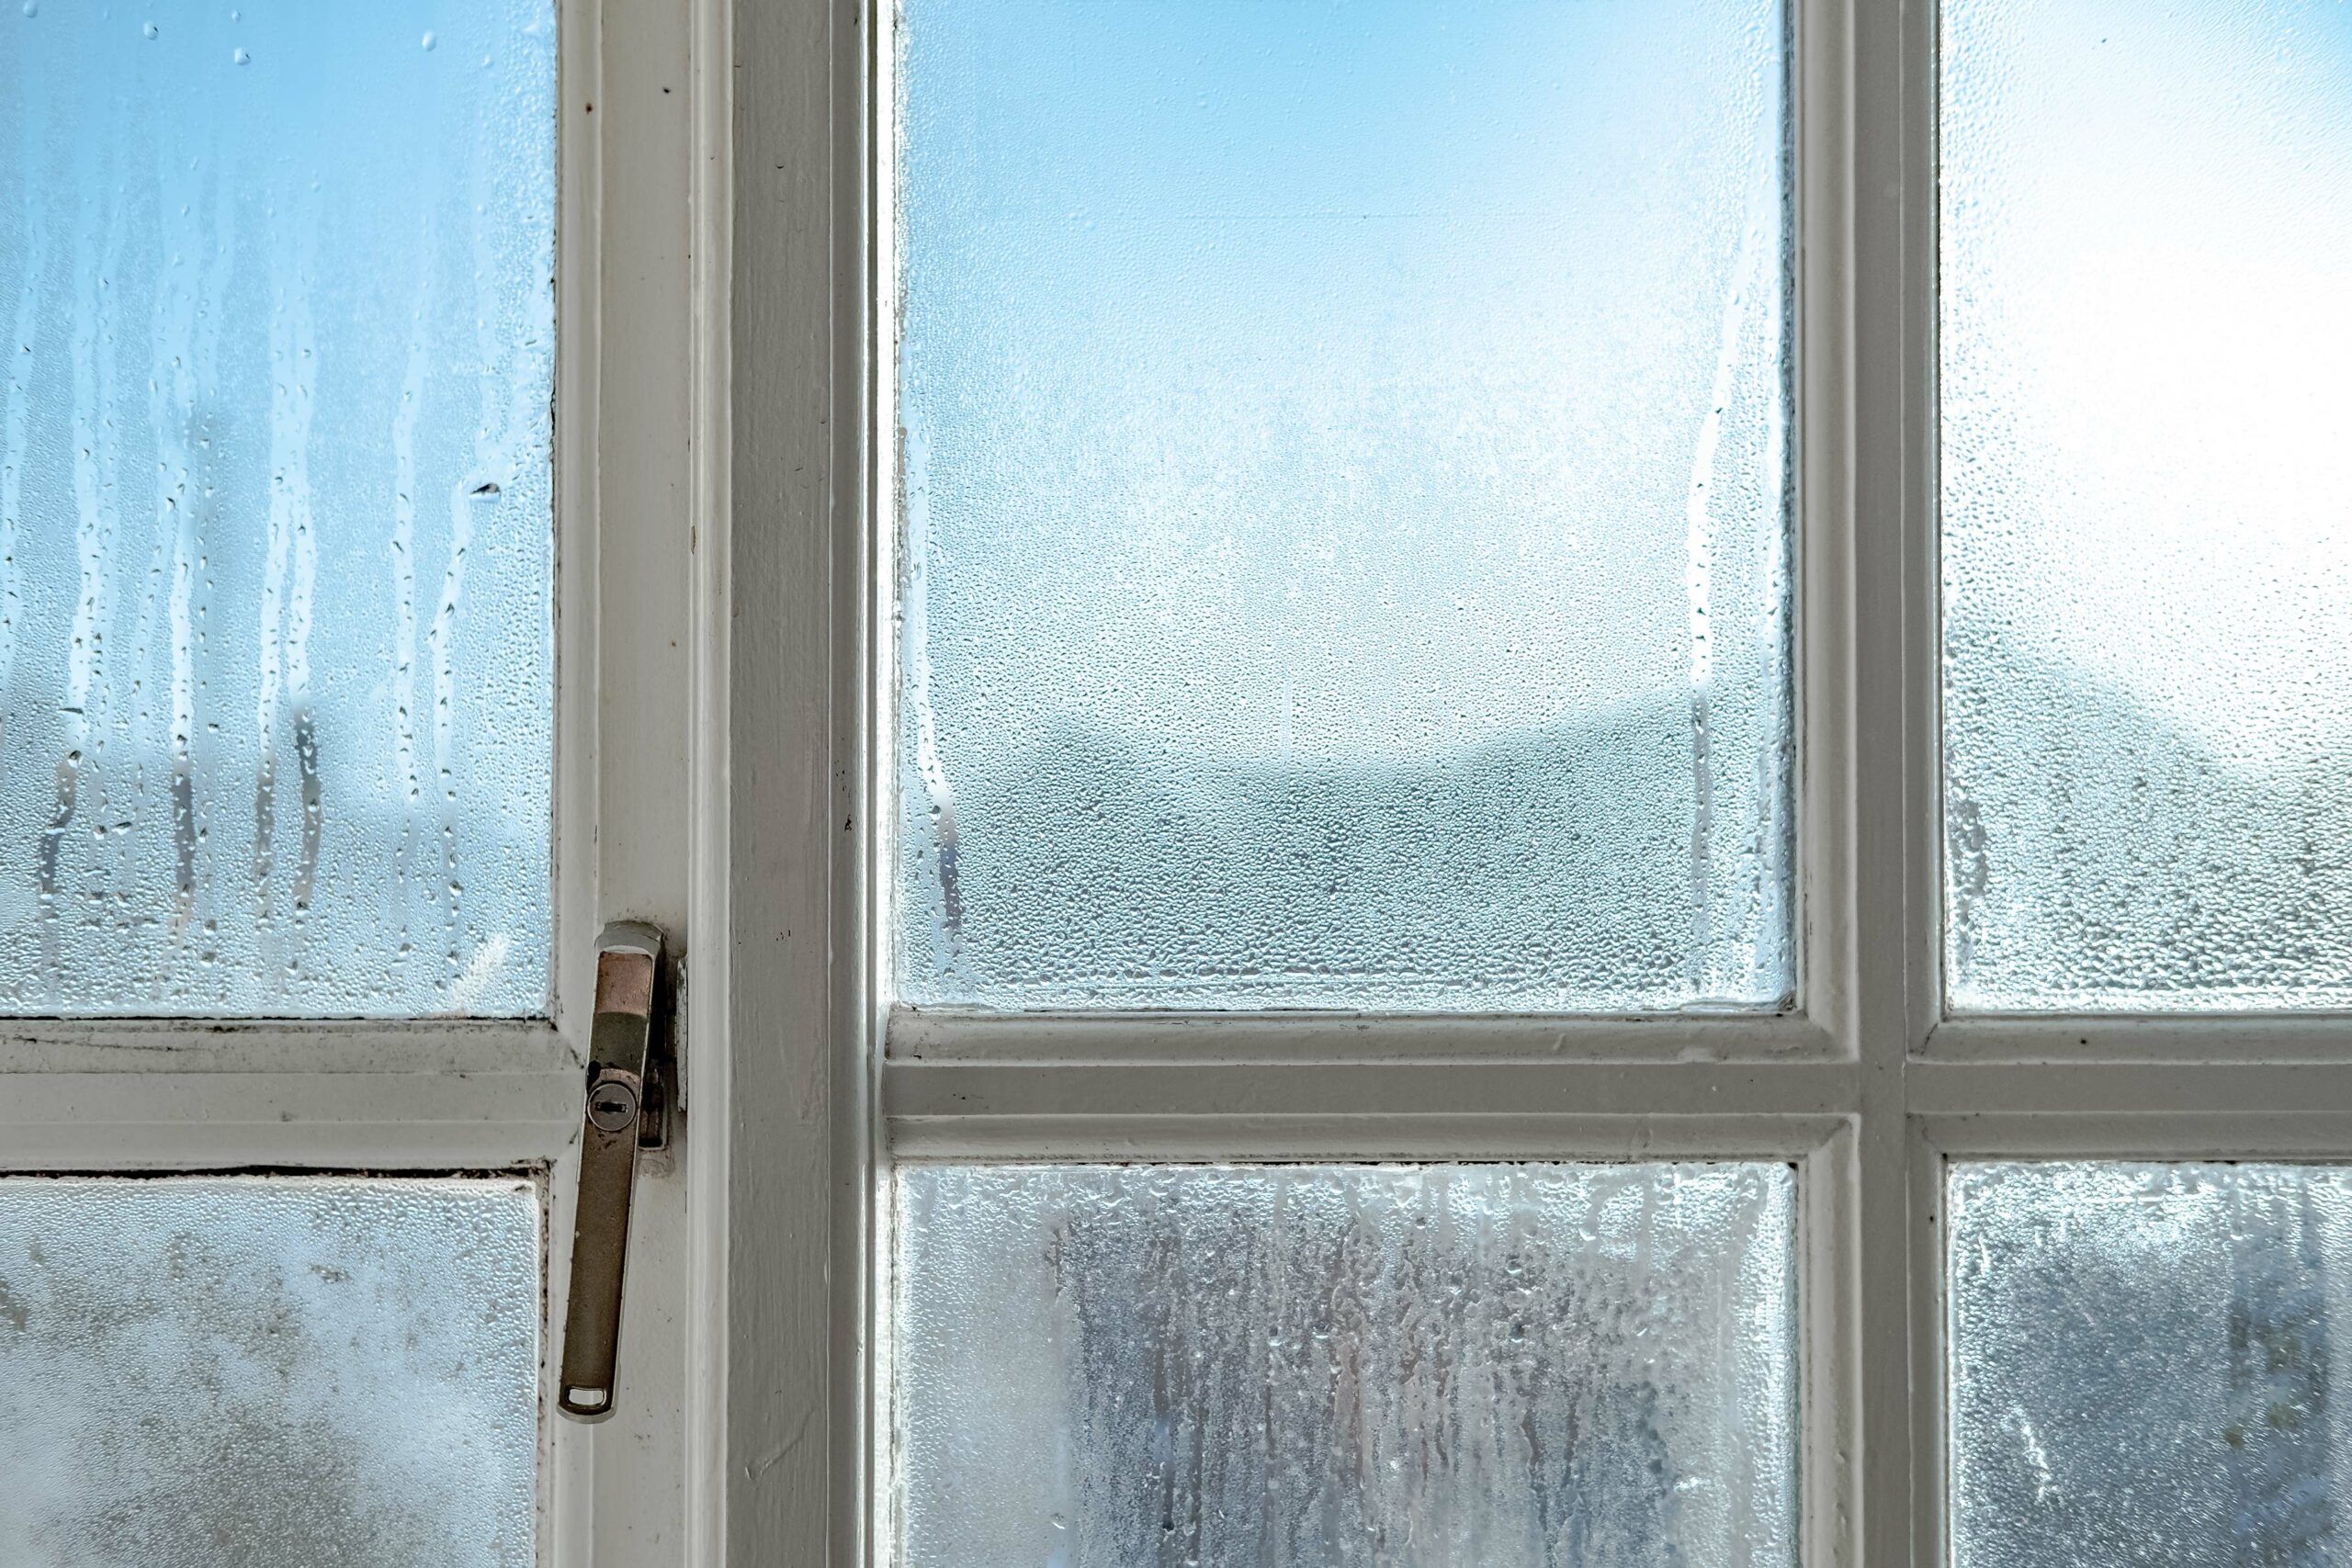 Condensation: Five top hacks to beat condensation around your home